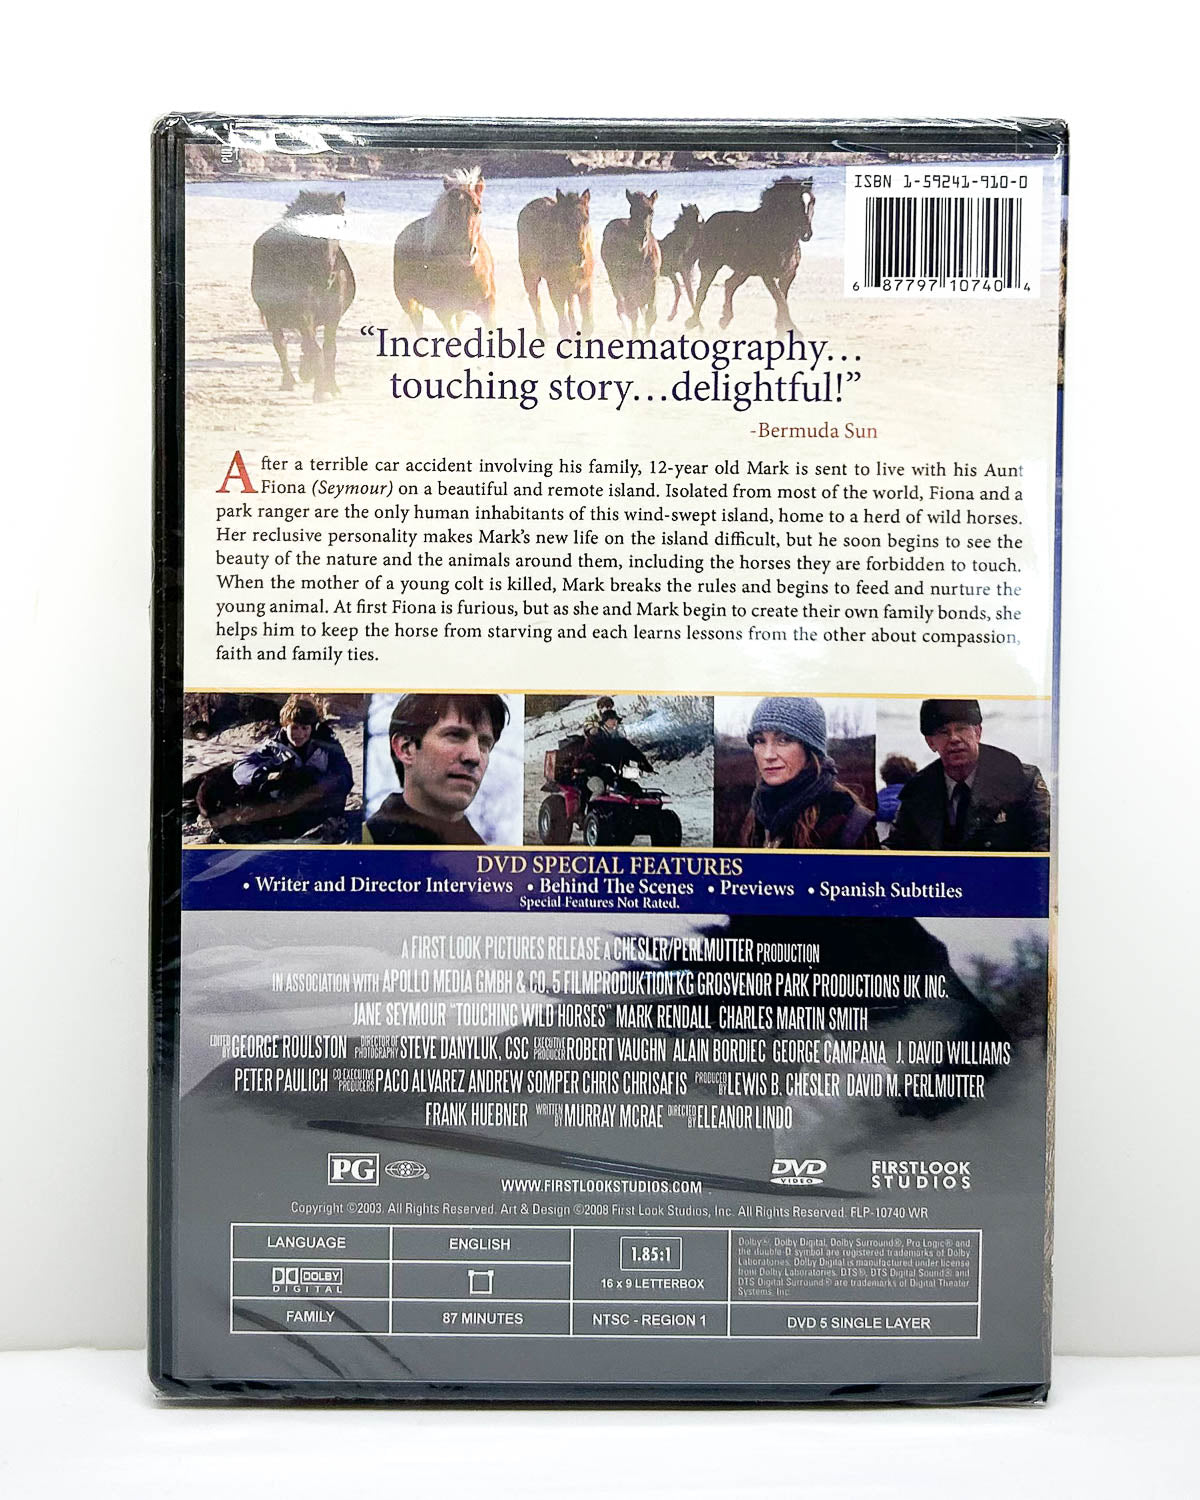 DVD:  Touching Wild Horses